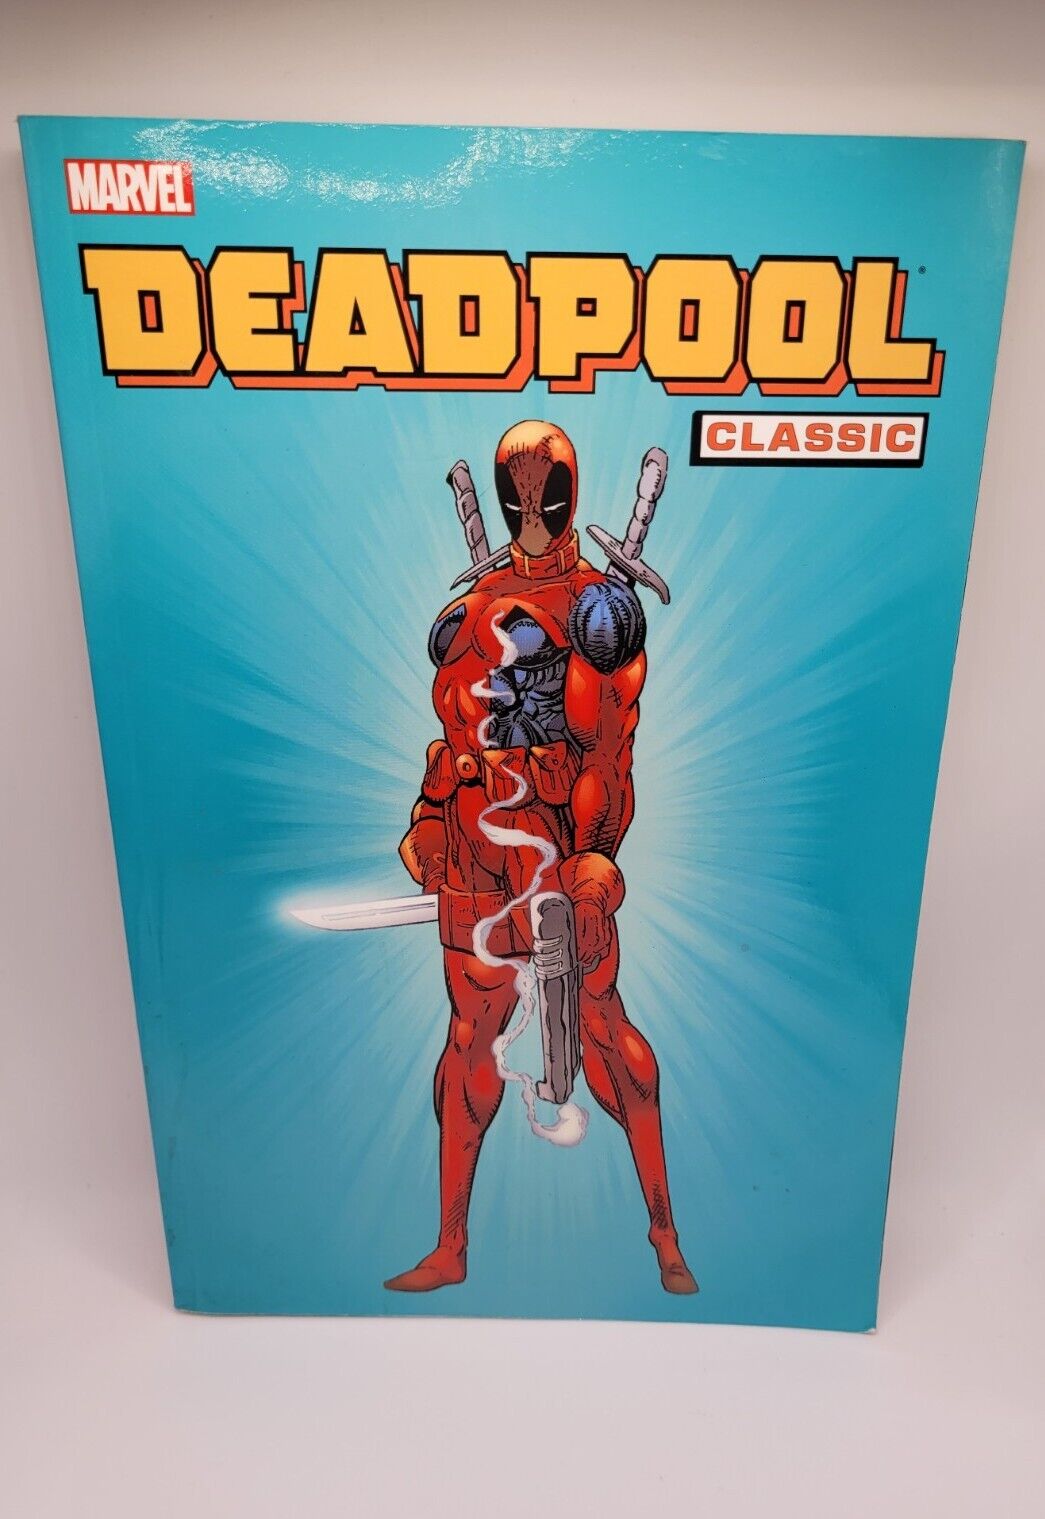 Deadpool Classic #1 (Marvel, 2008) TPB